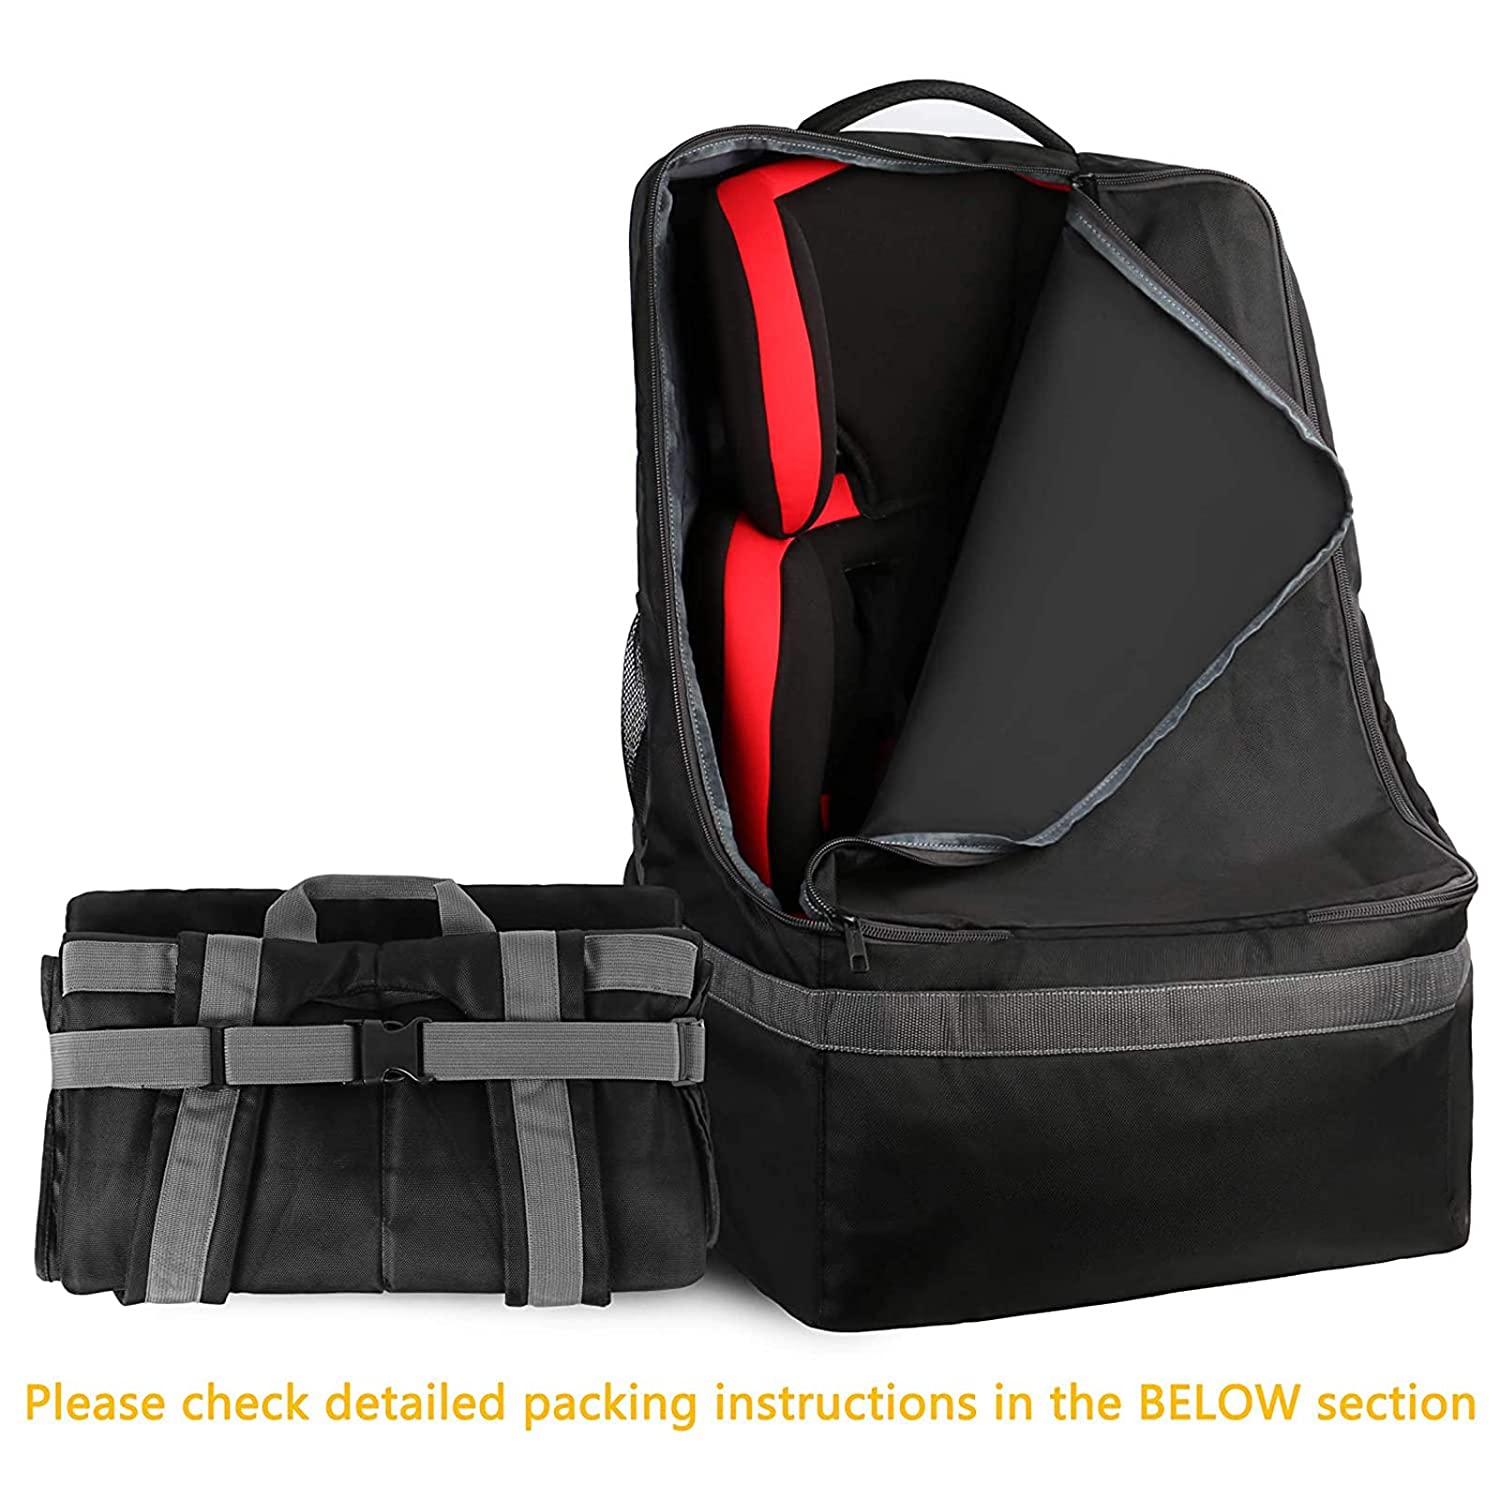 Car Seat Travel Bag, Large Durable Padded Carseat Carrier Bag, Airport Gate  Check Bag, Infant Seat Travel Bag, Black